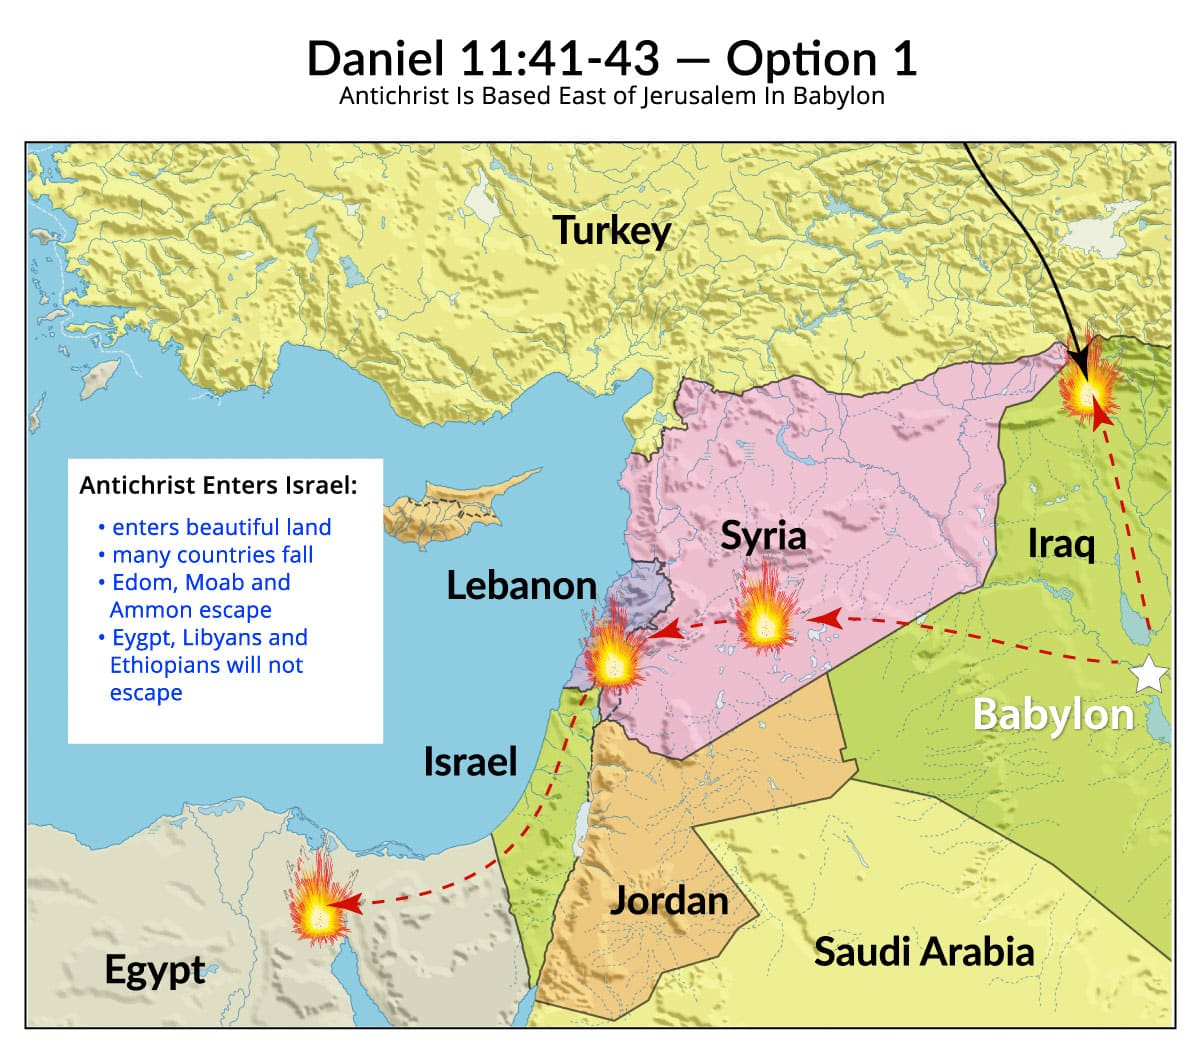 Daniel 11:41-43 — Option 1